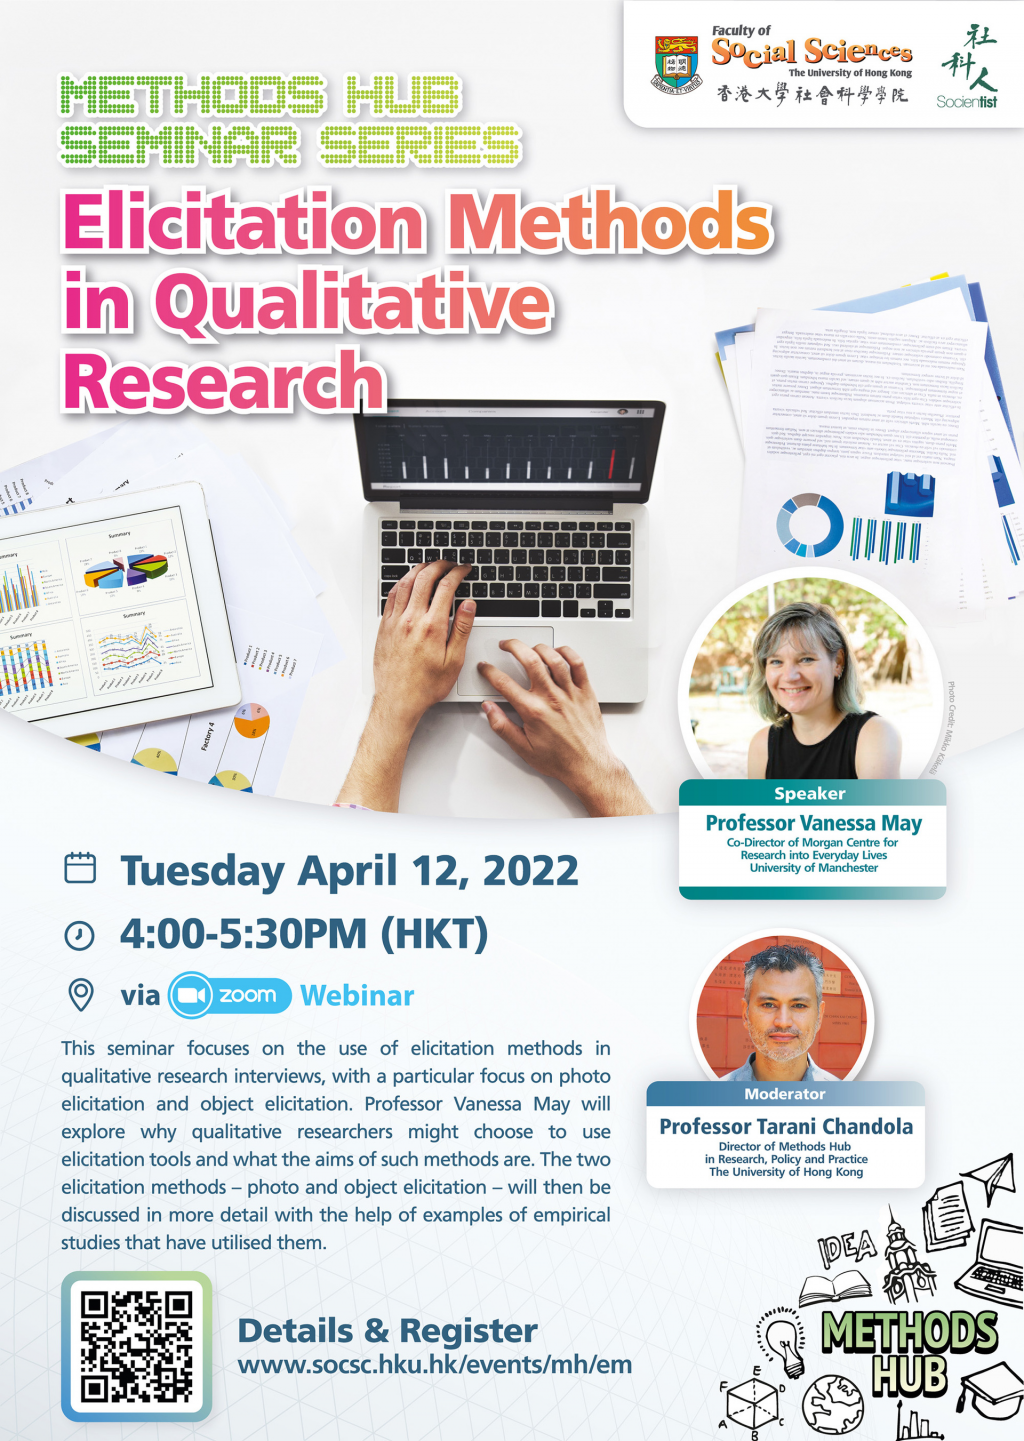 Methods Hub Seminar Series: Elicitation Methods in Qualitative Research (April 12, 4pm)